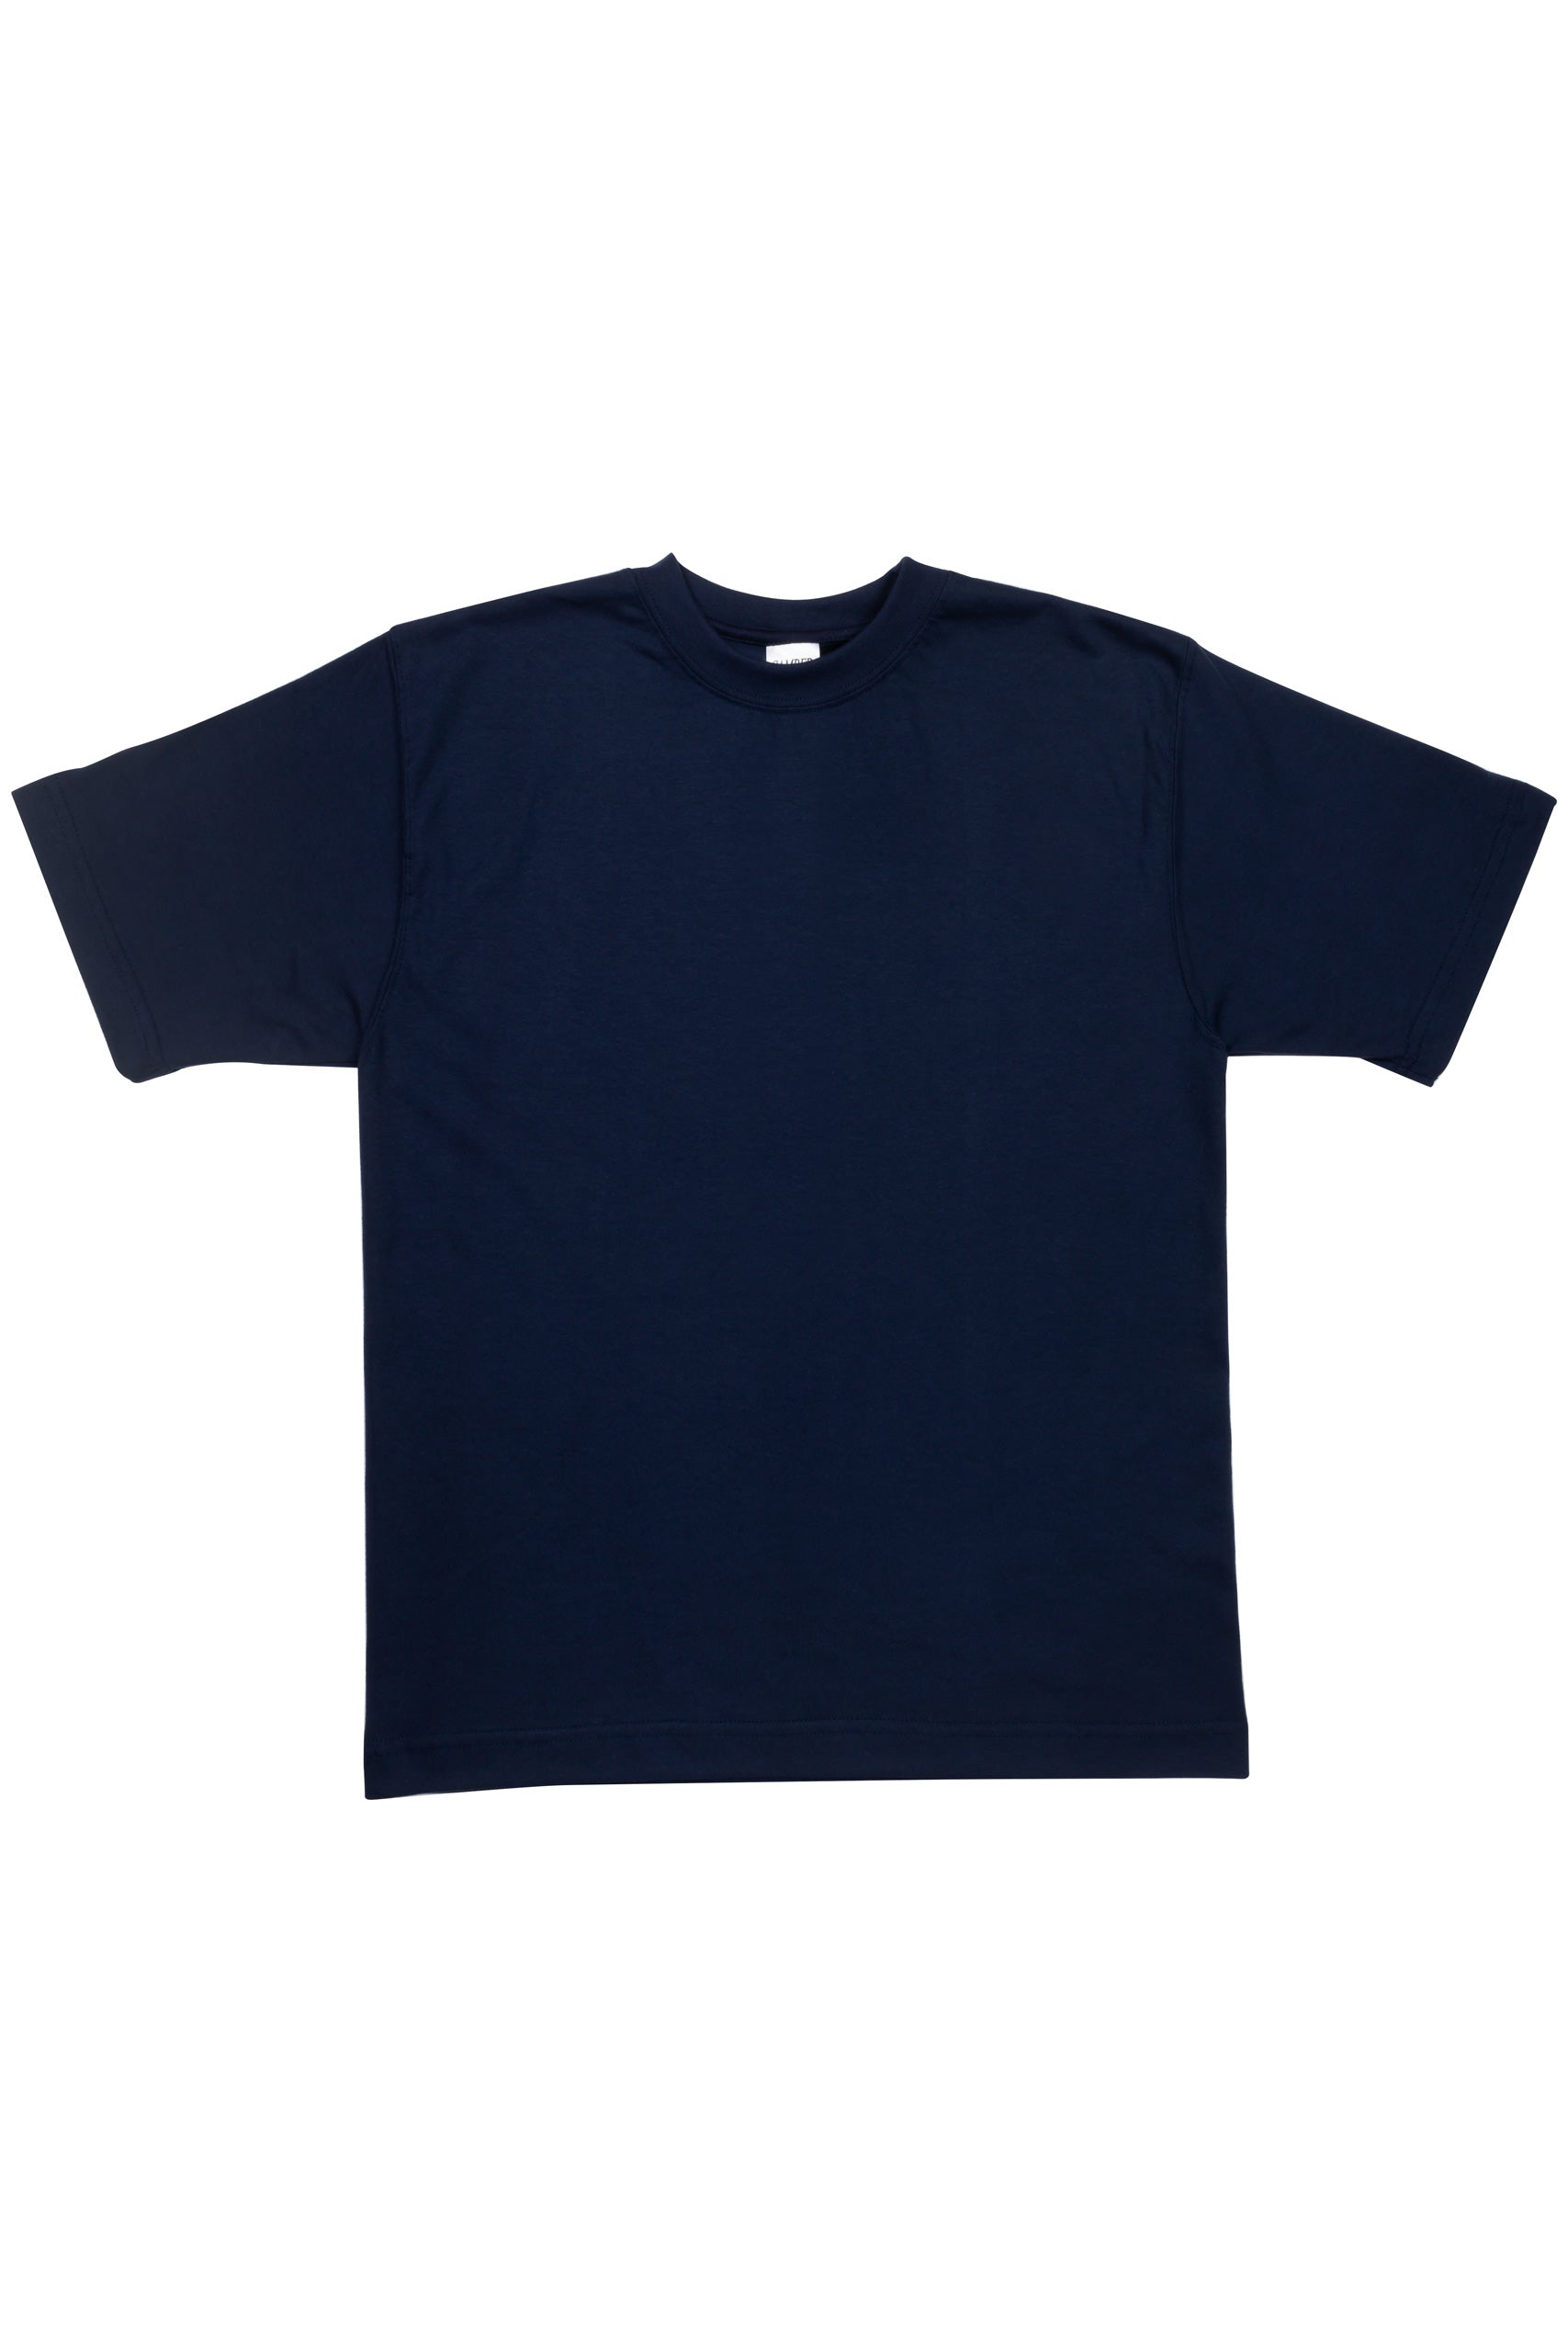 – Navy Clothiers 6oz USA 701 Camber Embark T-Shirt